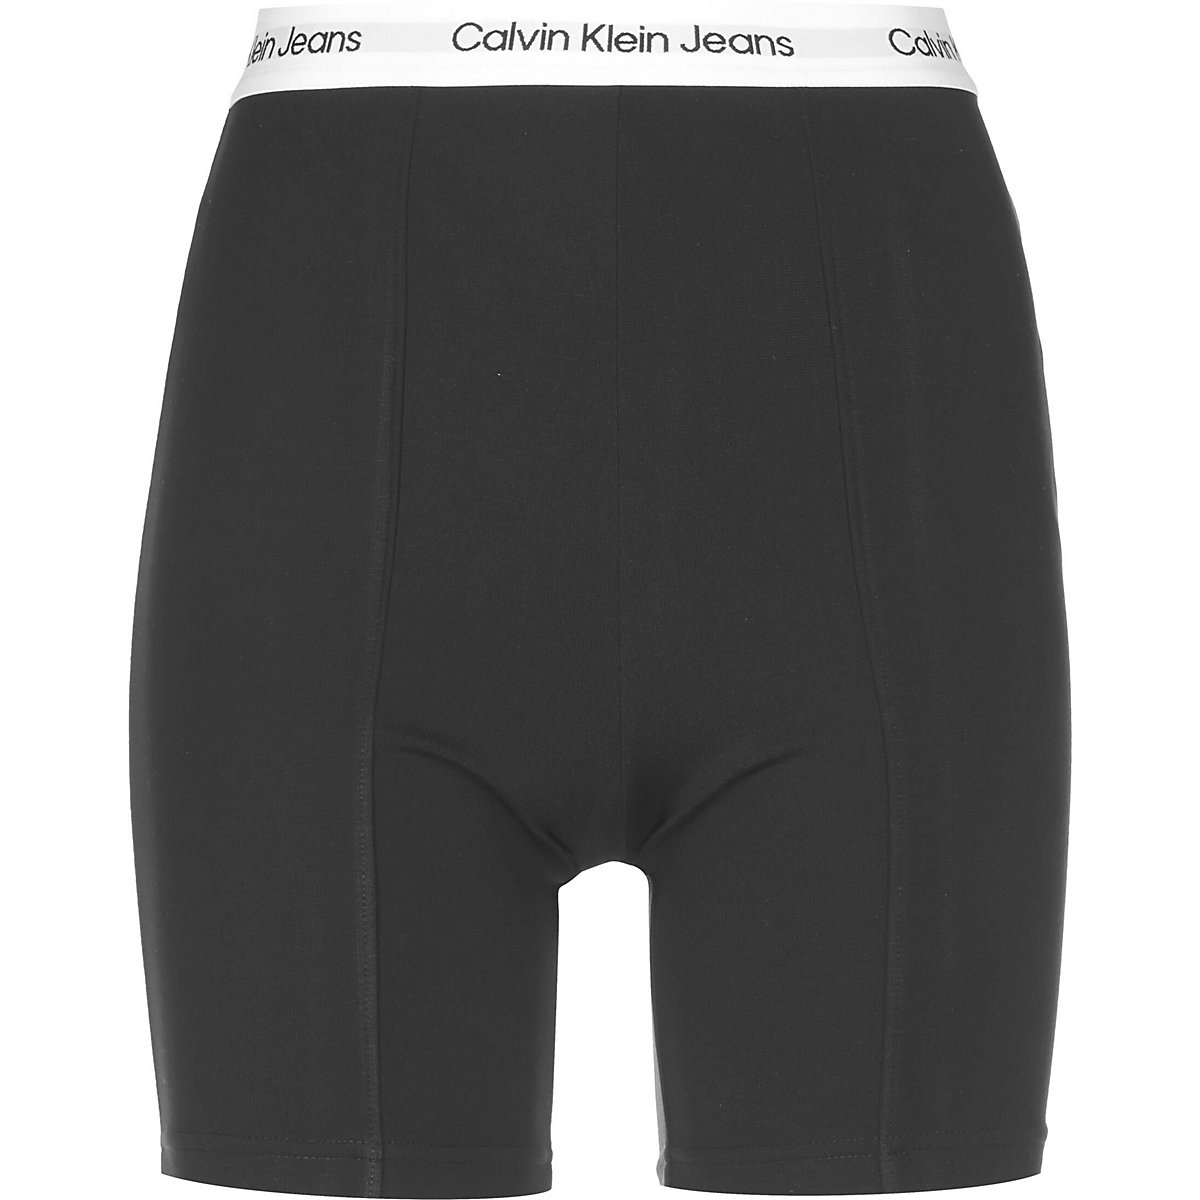 CALVIN KLEIN JEANS Calvin Klein Jeans Shorts Rib Cycling Sportshorts schwarz